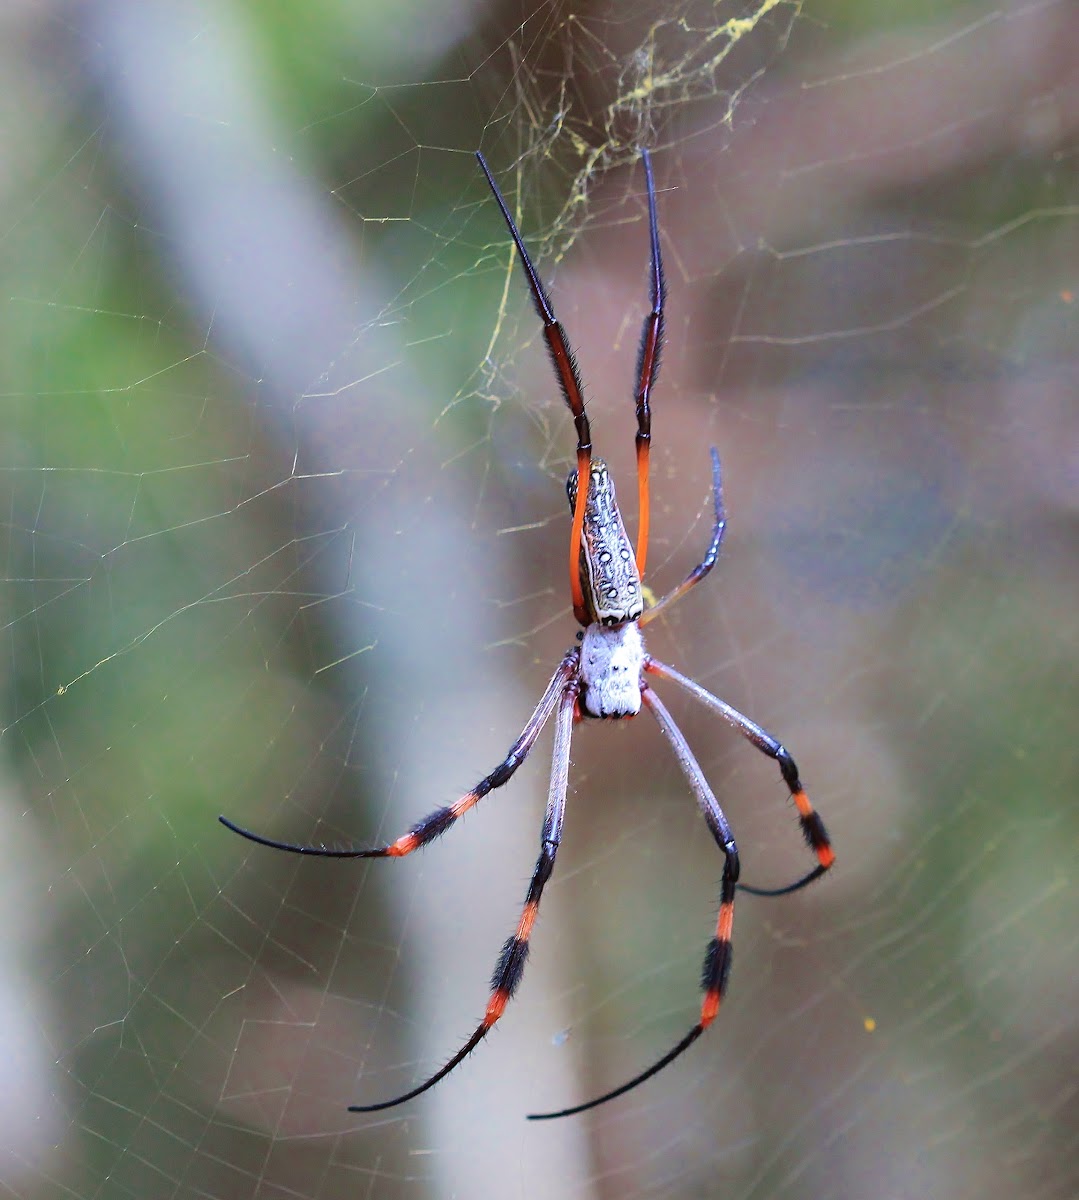 Banded-legged Golden Orb-web Spider